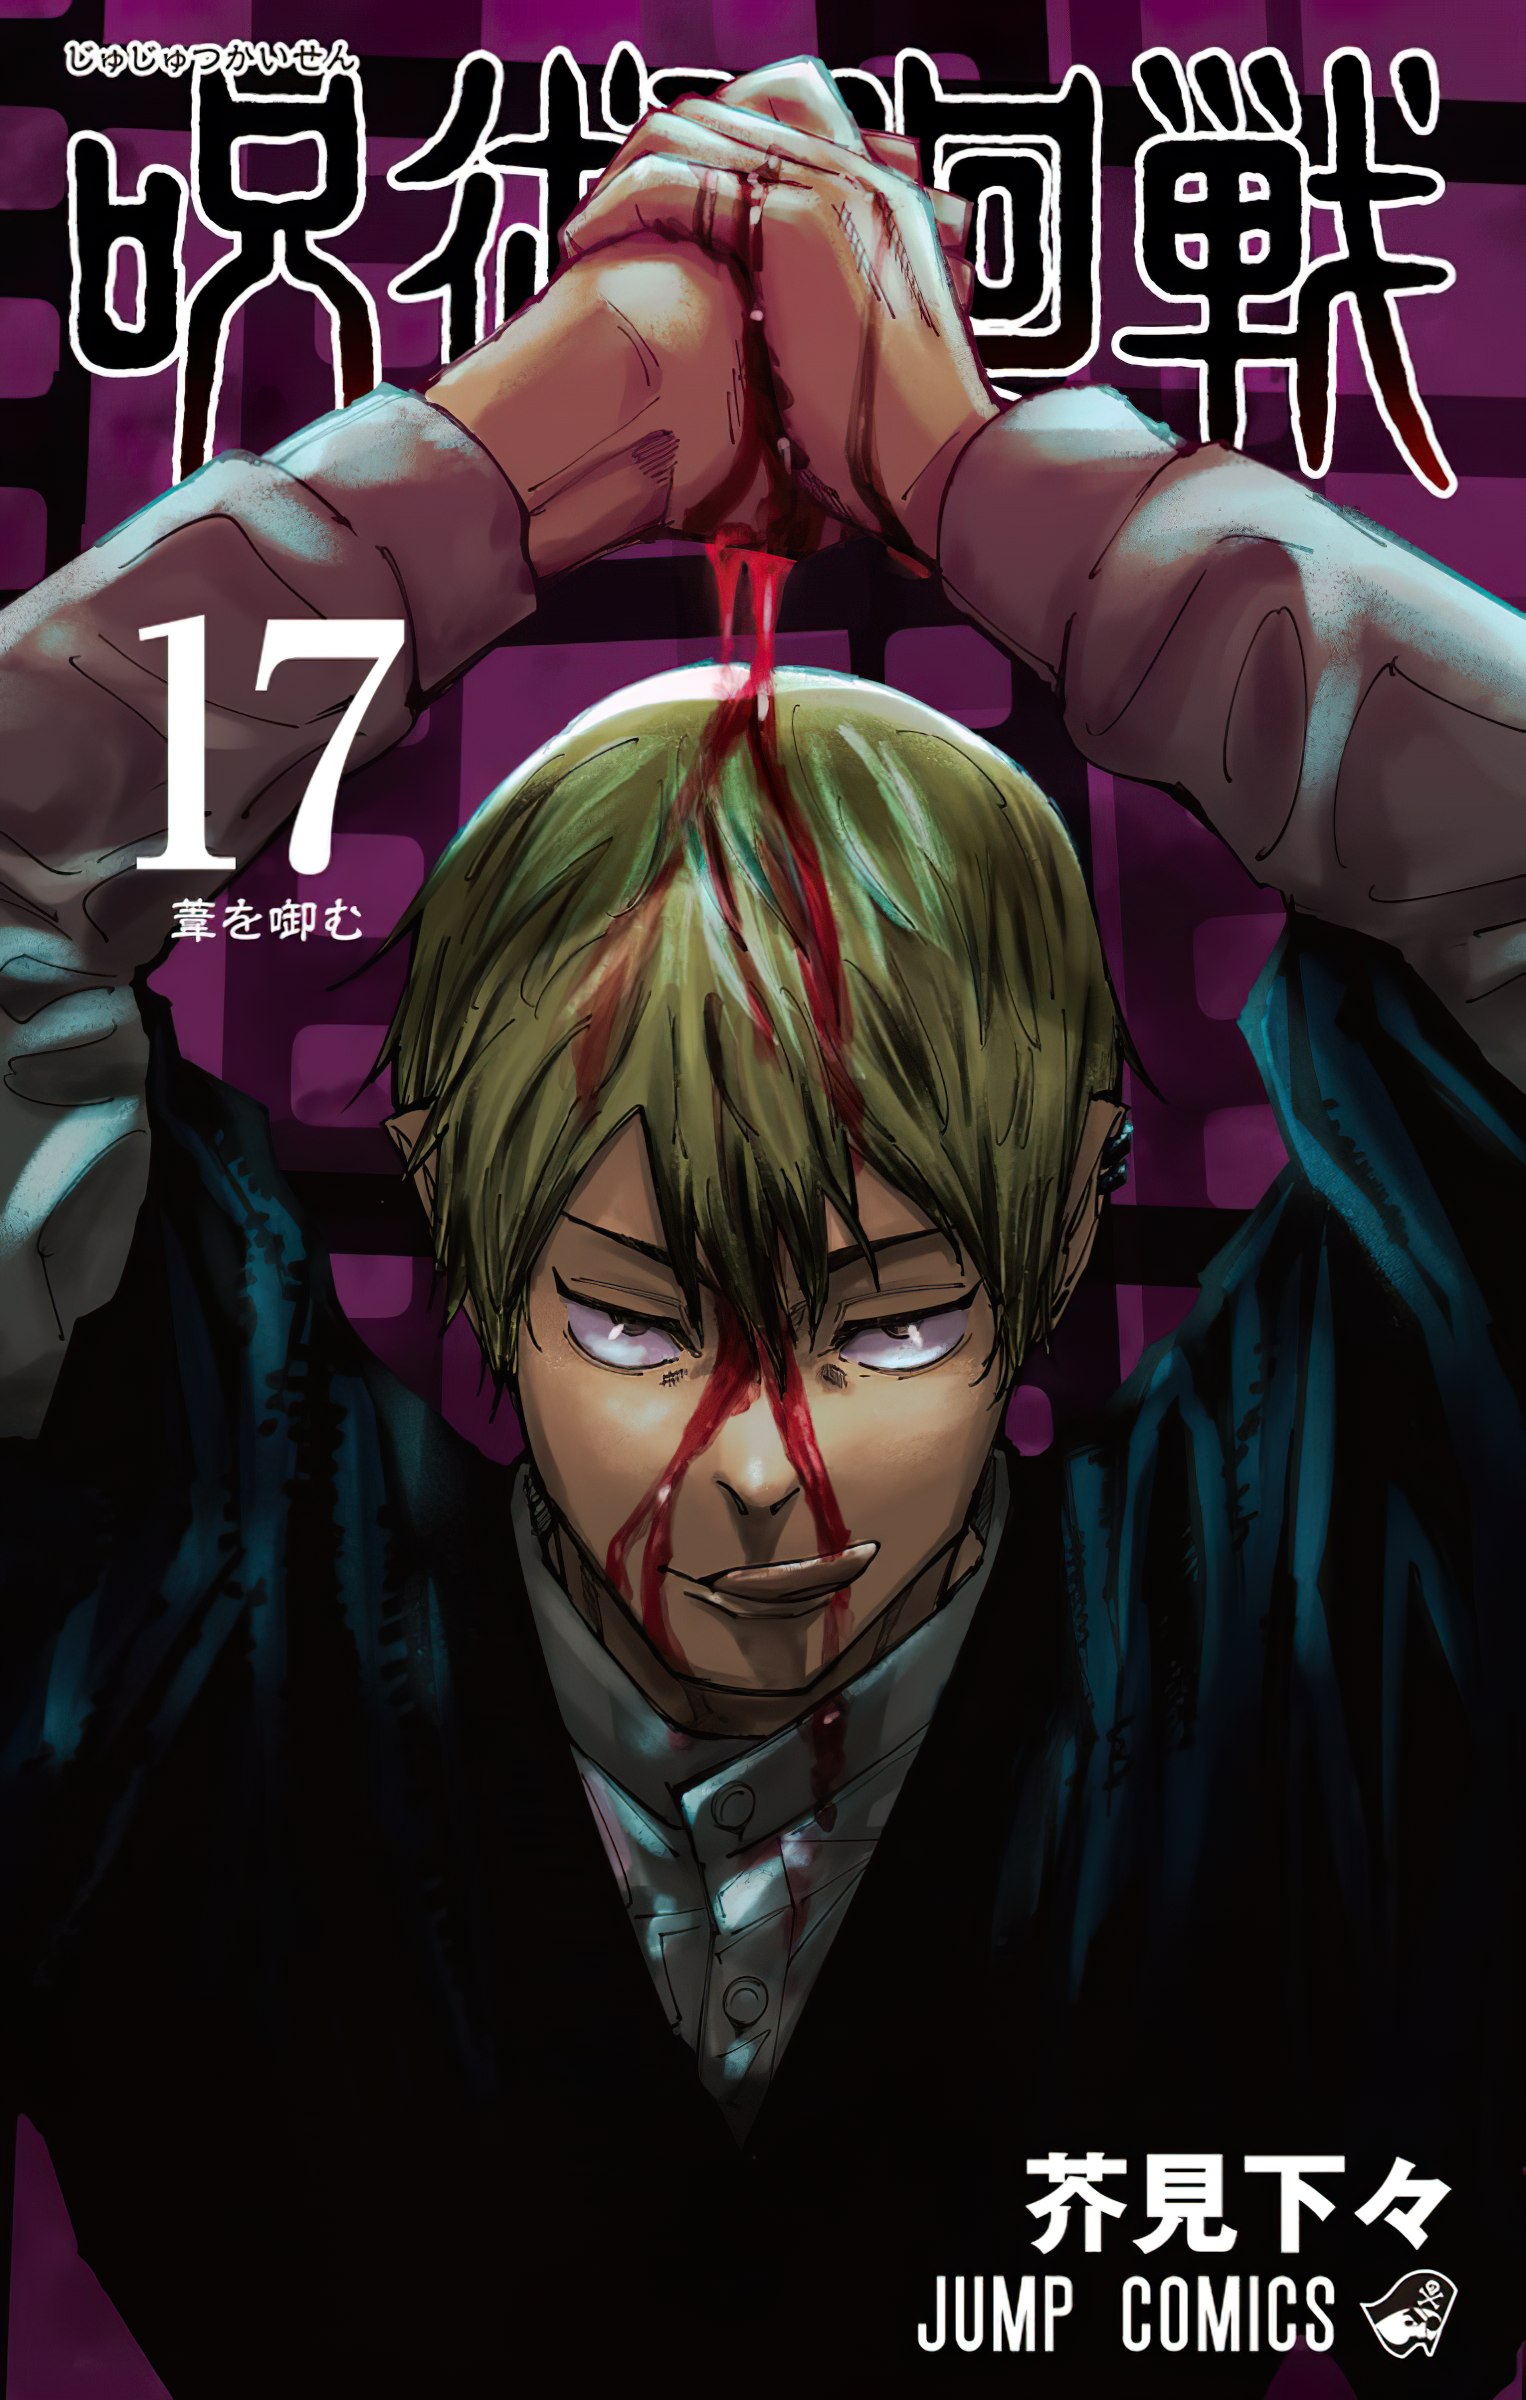 El manga Jujutsu Kaisen revela la portada de su volumen 17 — Kudasai